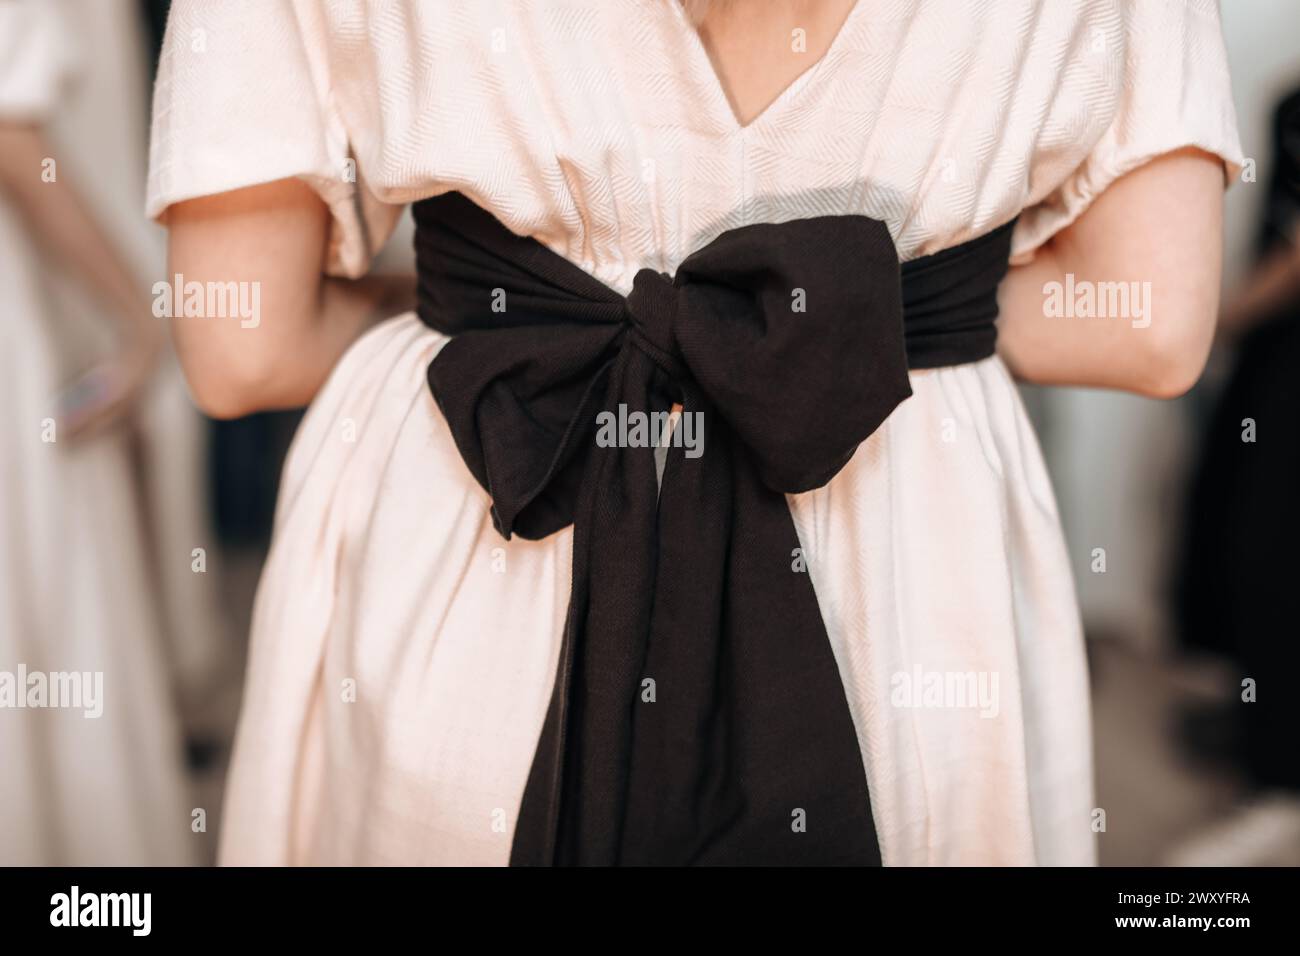 Detalles de moda femenina elegante vestido beige primavera verano con gran lazo negro en la parte posterior Foto de stock